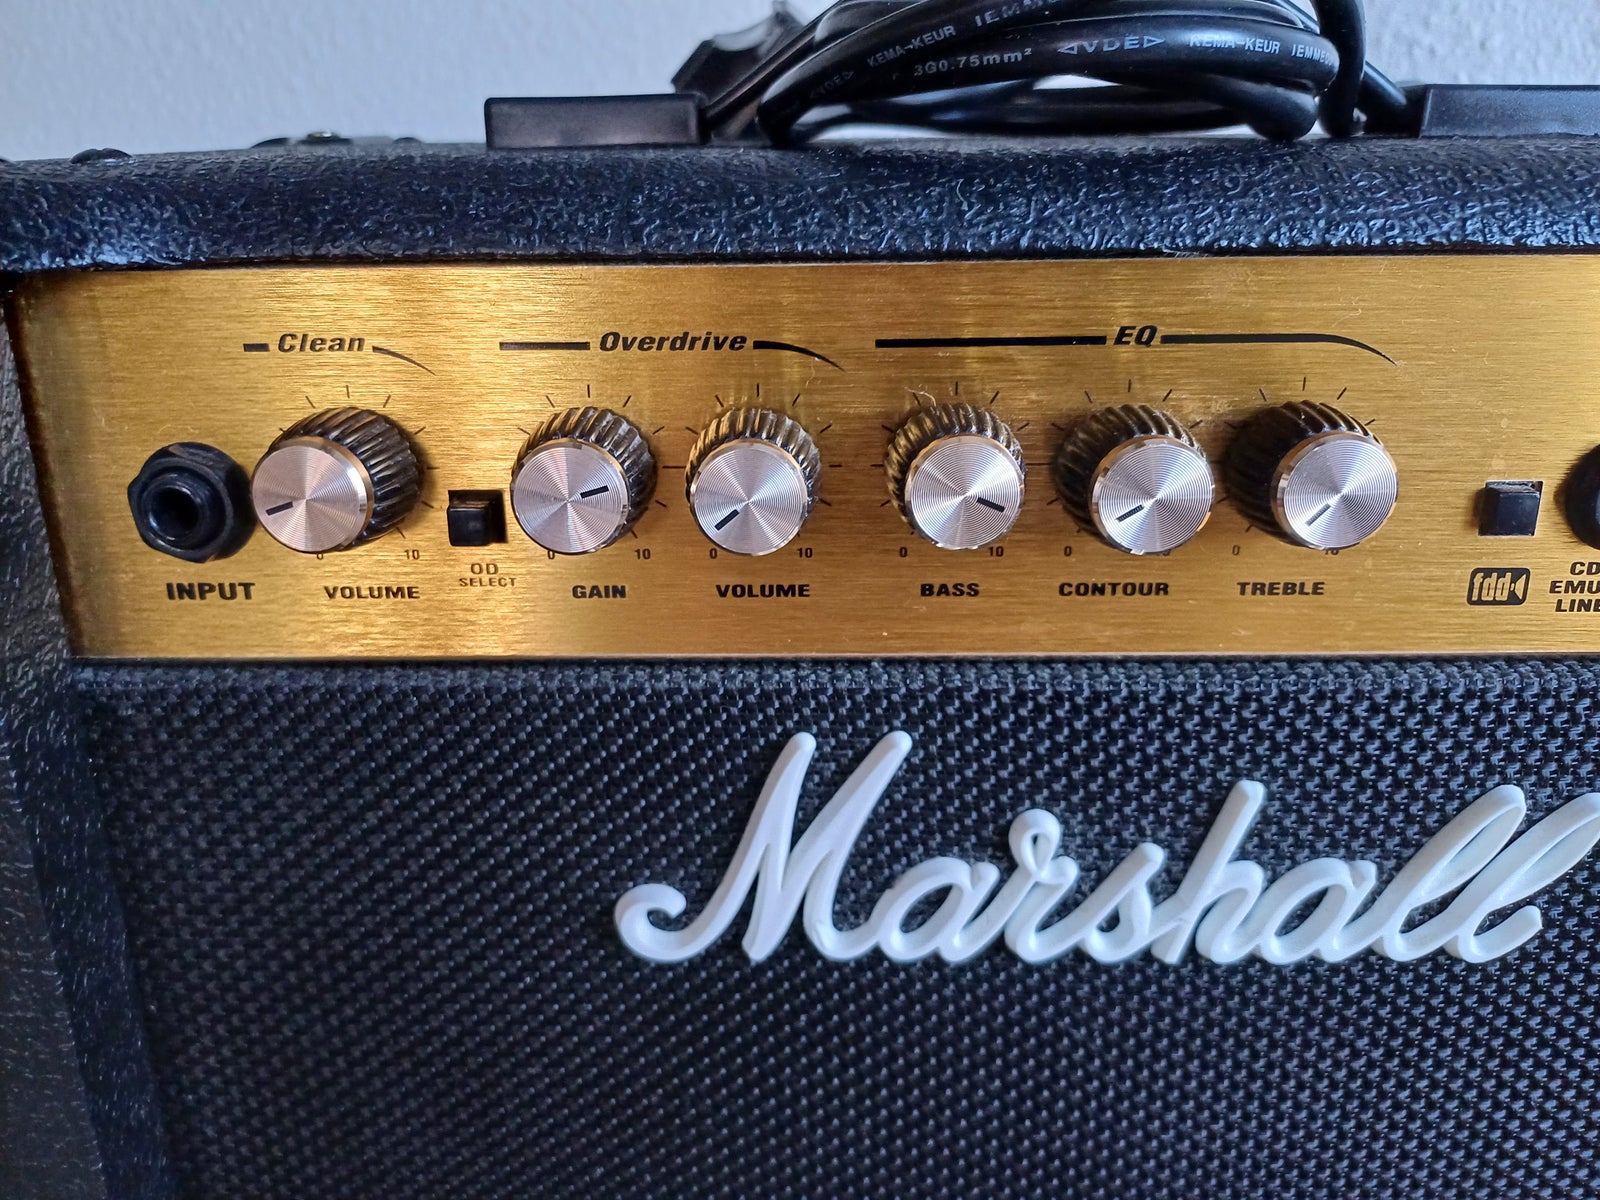 Guitarcombo, Marshall MG15CD, 15 W